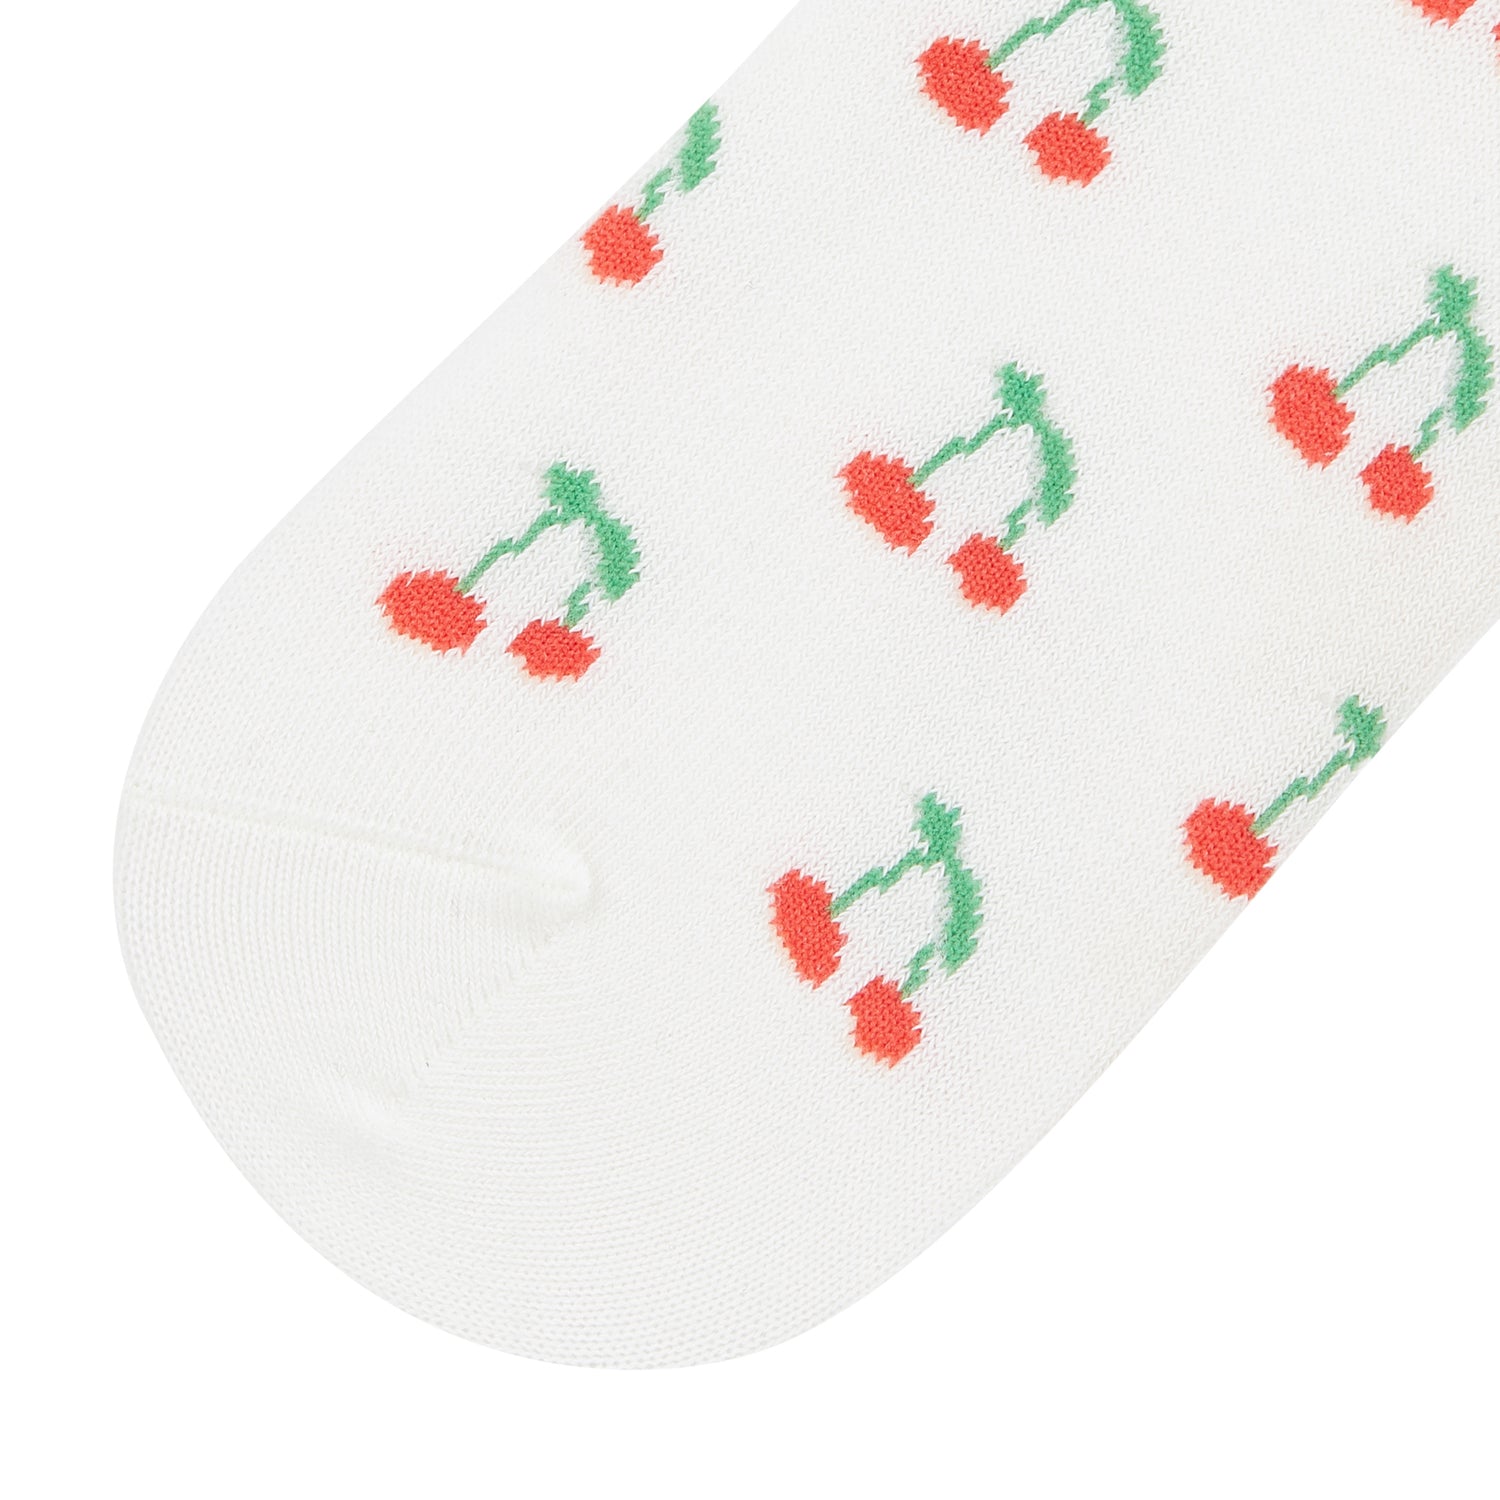 Cherry Printed Ankle Socks - IDENTITY Apparel Shop